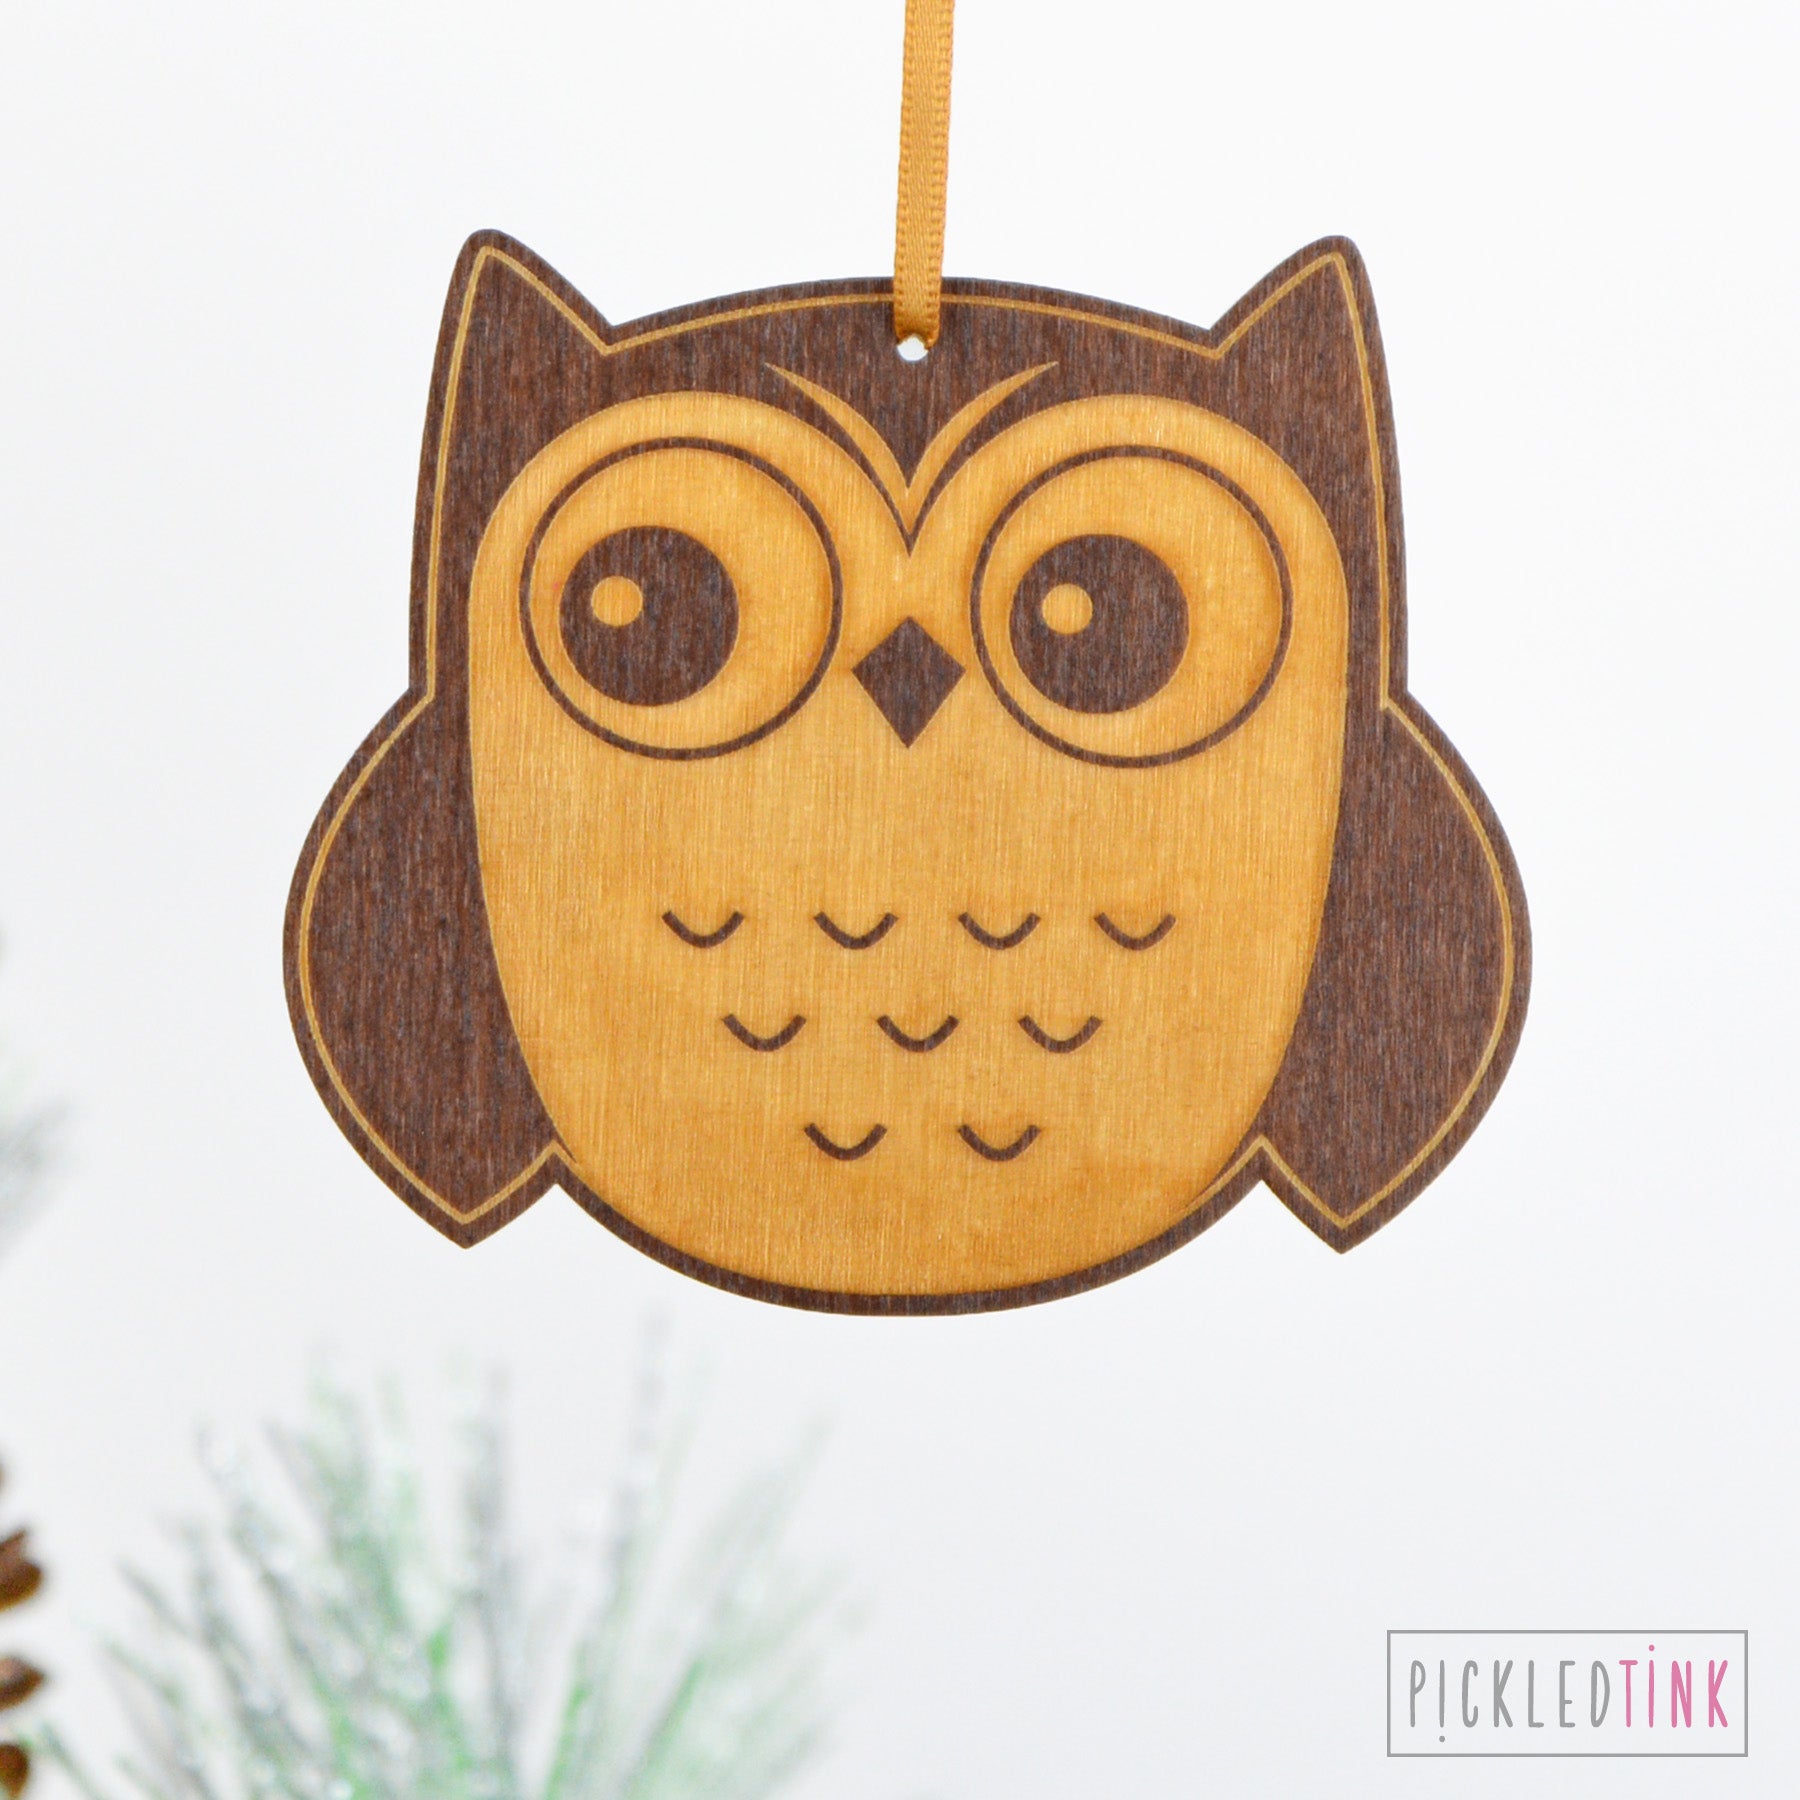 Owl Decoration